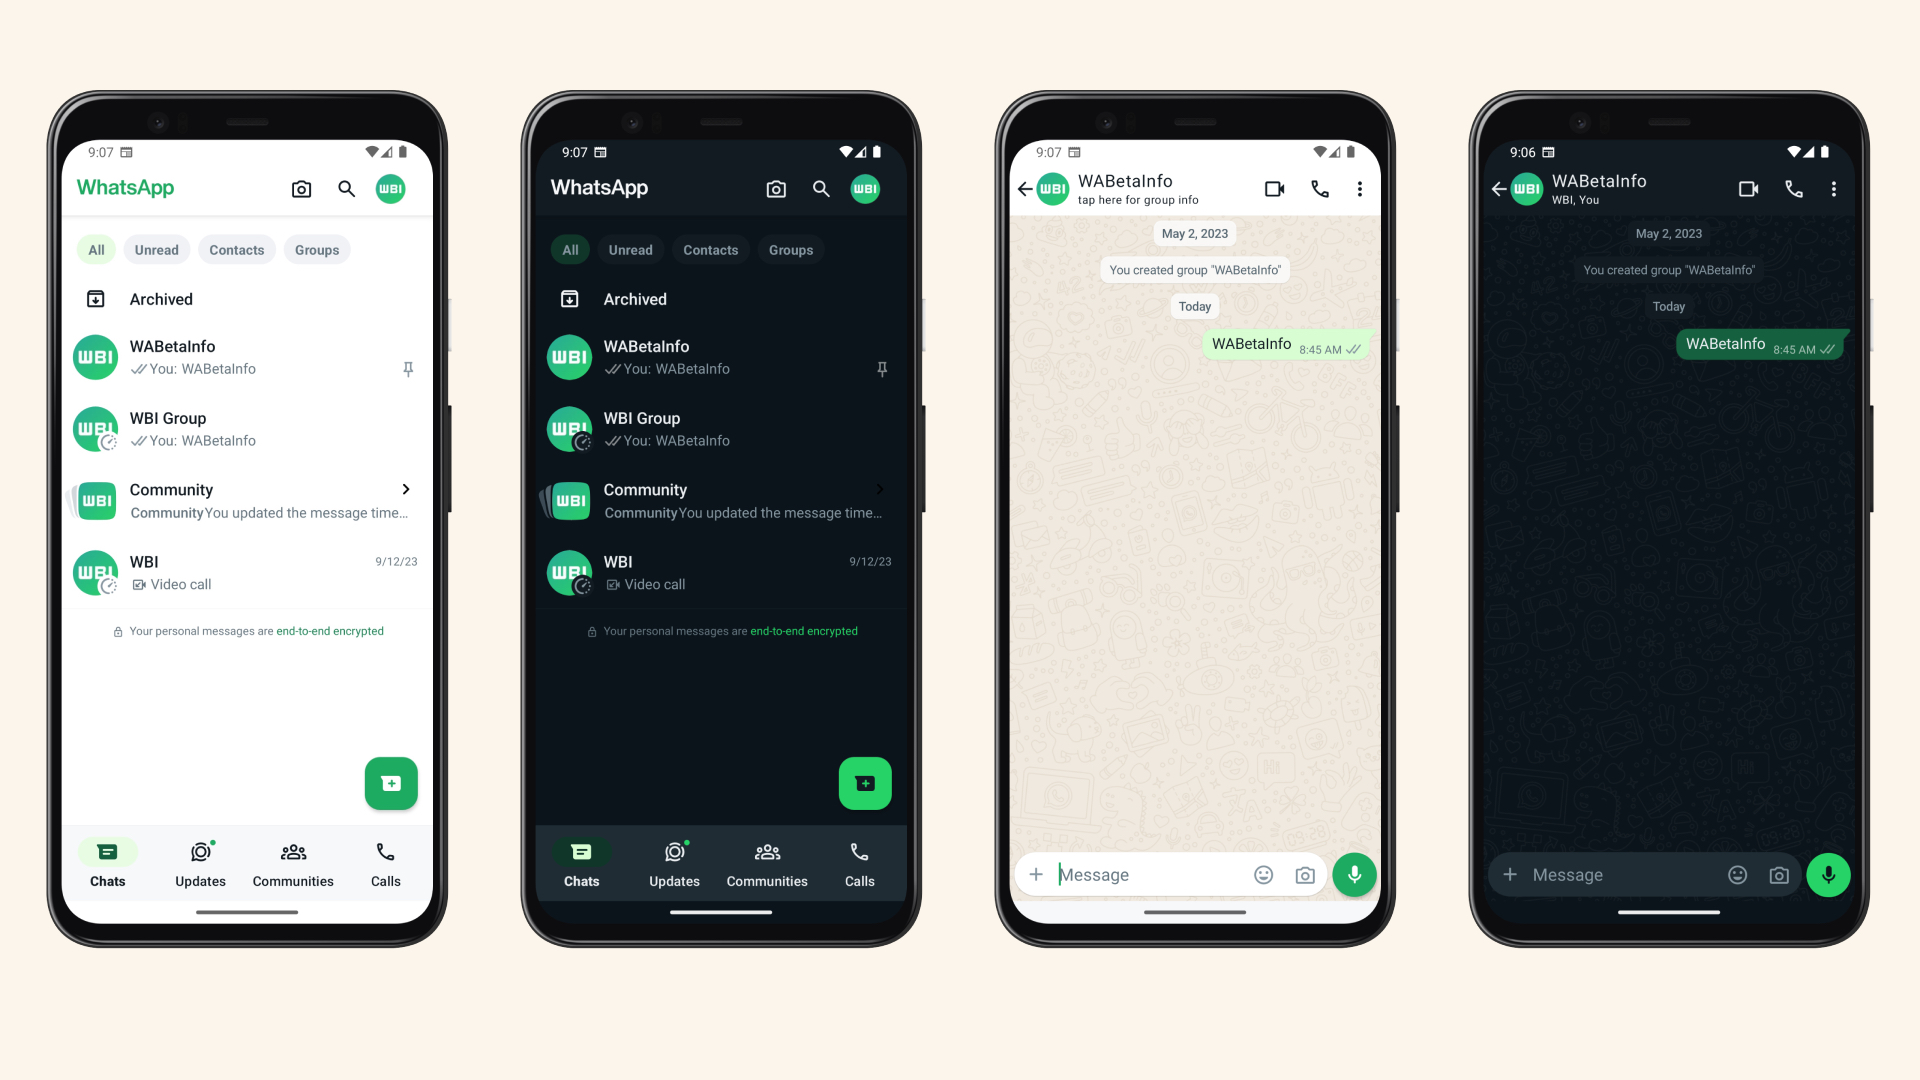 More Images Of Whatsapp S Redesigned Ui Leak Sammobile